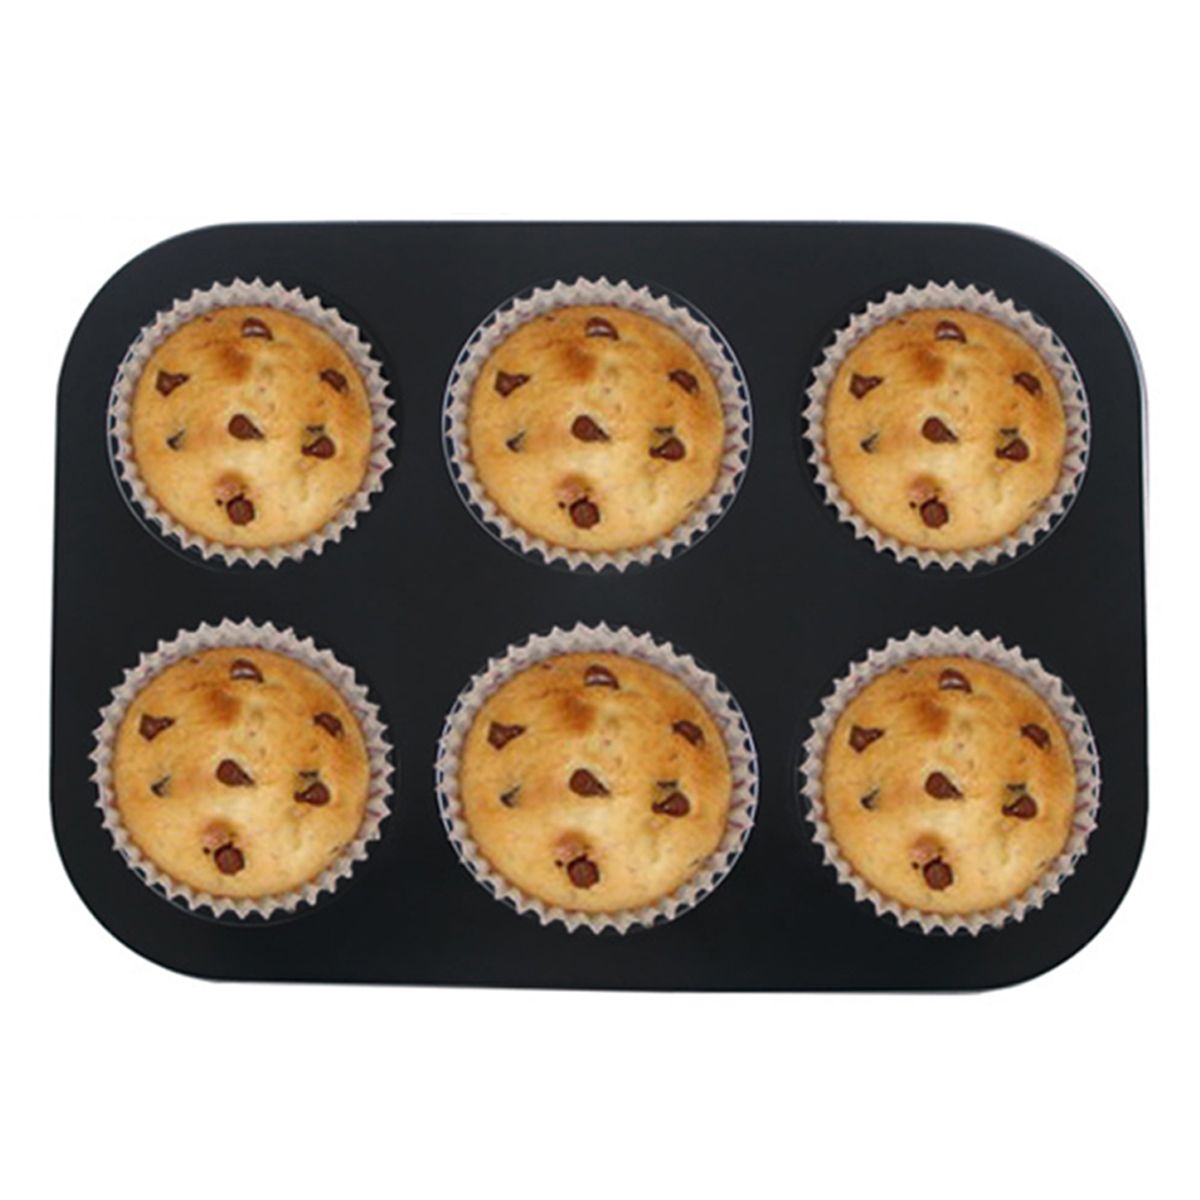 6pc-Muffin-Pan-Baking-Cooking-Tray-Mould-Round-Bake-Cup-Cake-GoldBlack-1502152